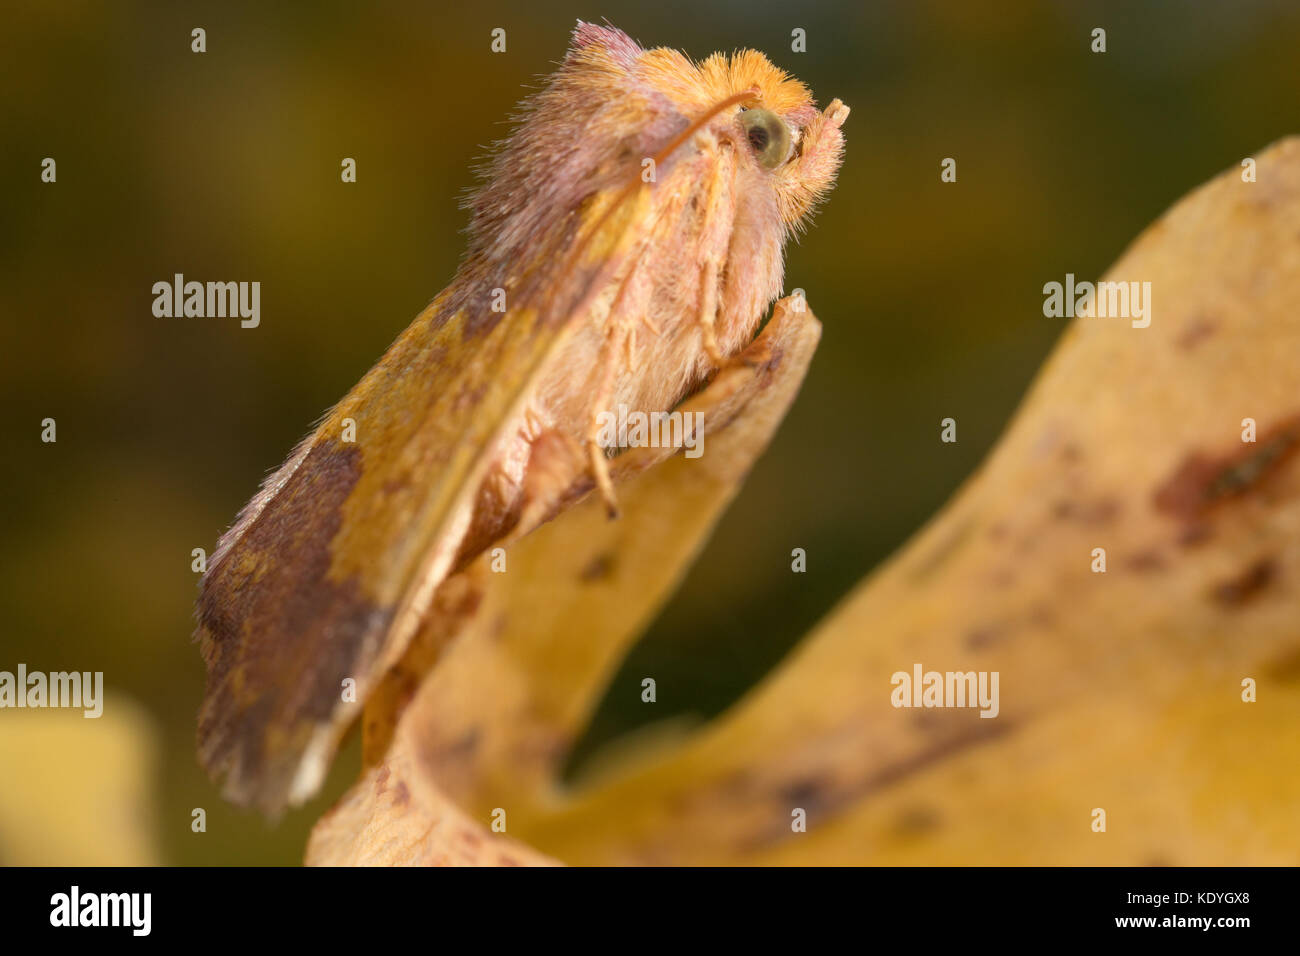 barred sallow moth in British garden Stock Photo